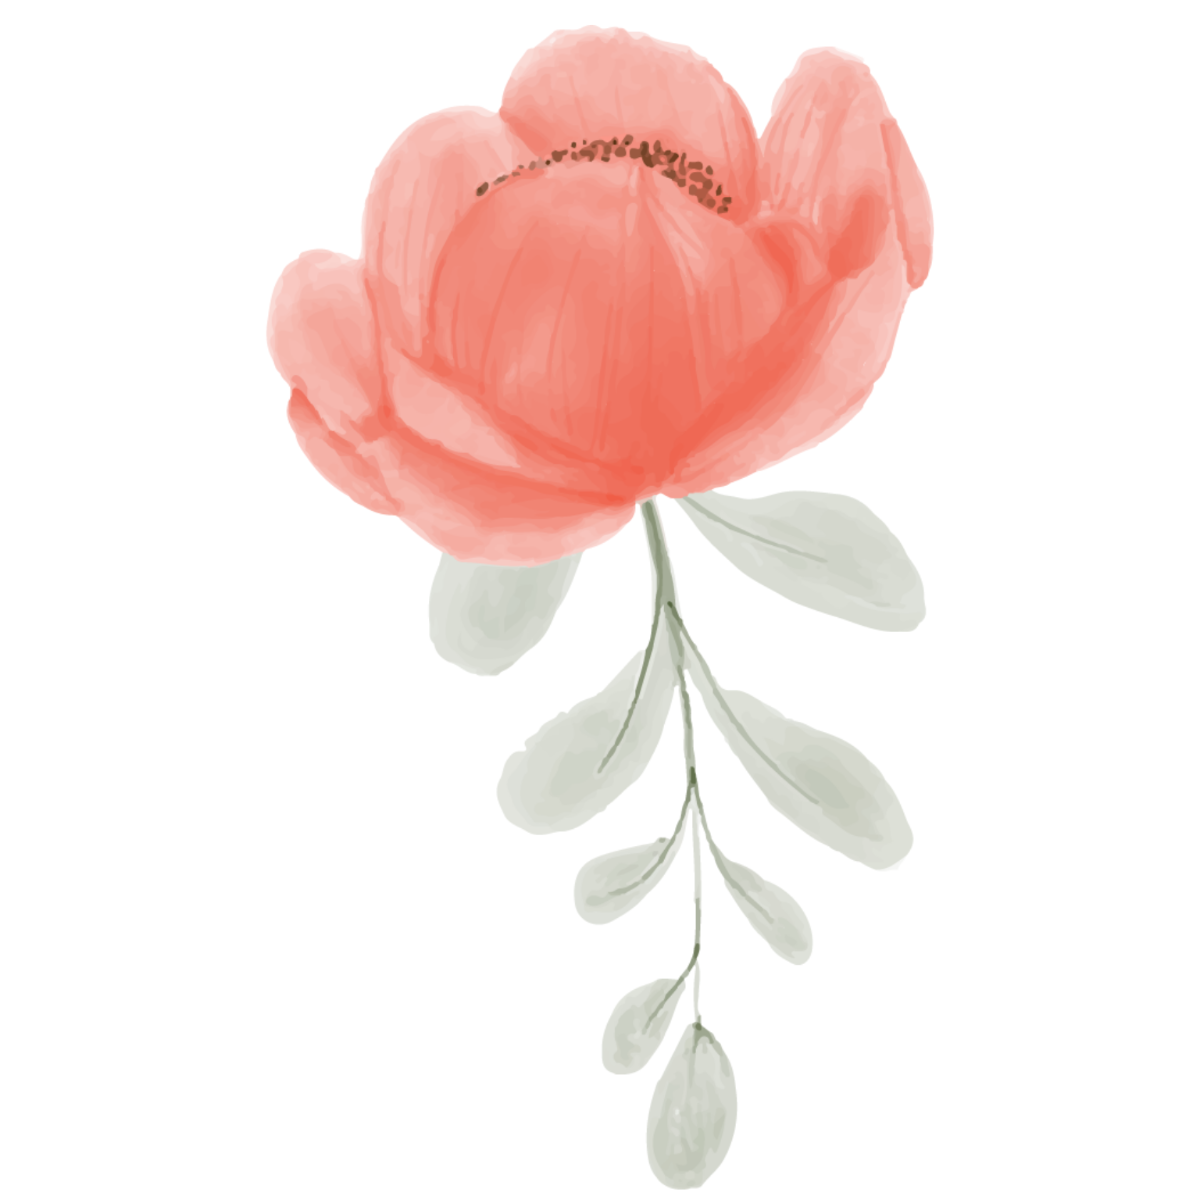 Watercolor Pink Flower